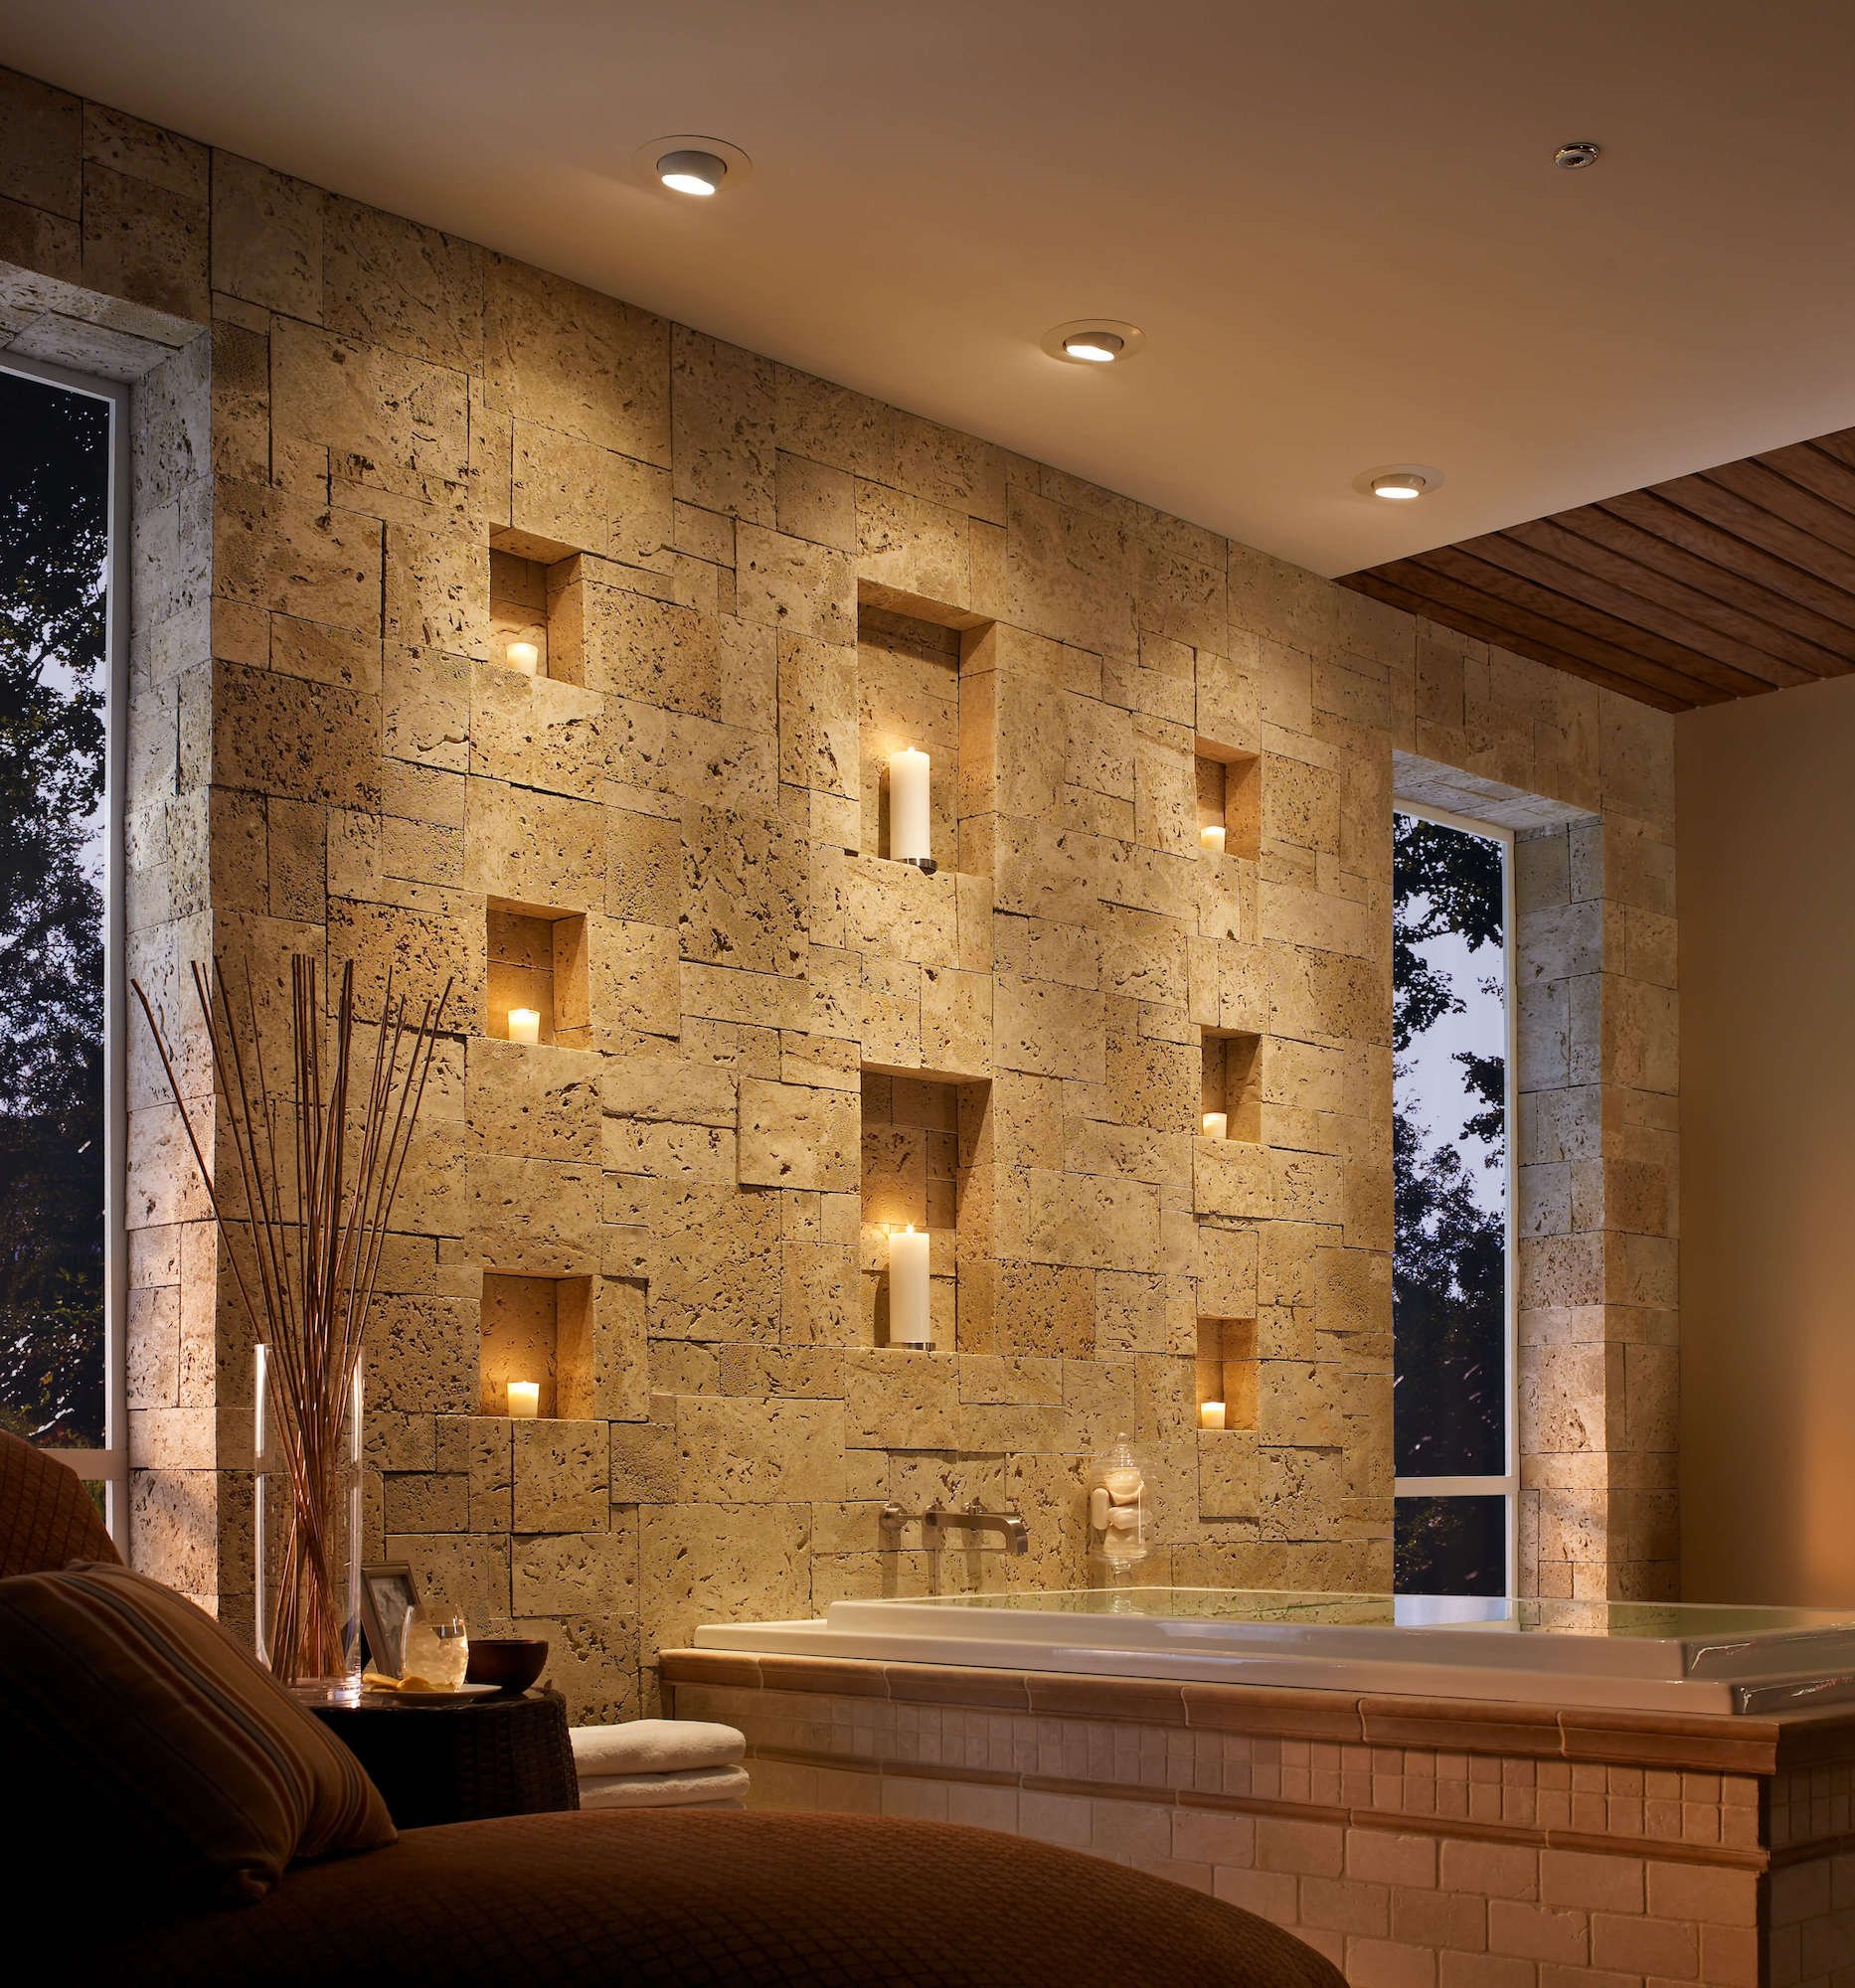 Eldorado Stone Coastal Reef Sanibel warm cream thin stone on interior bathroom wall with decorative built in candle shelving